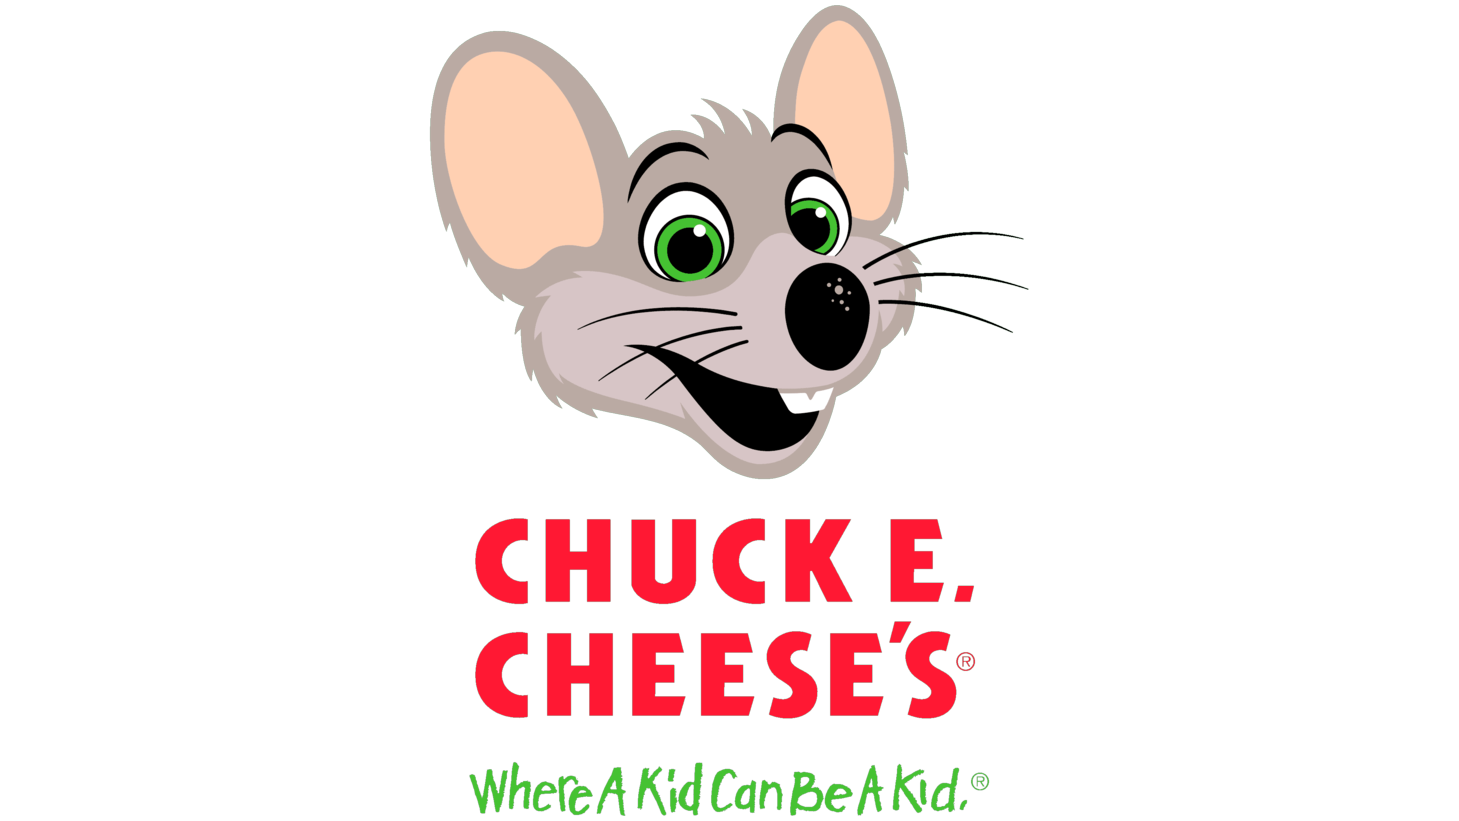 Chuck e. cheese symbol